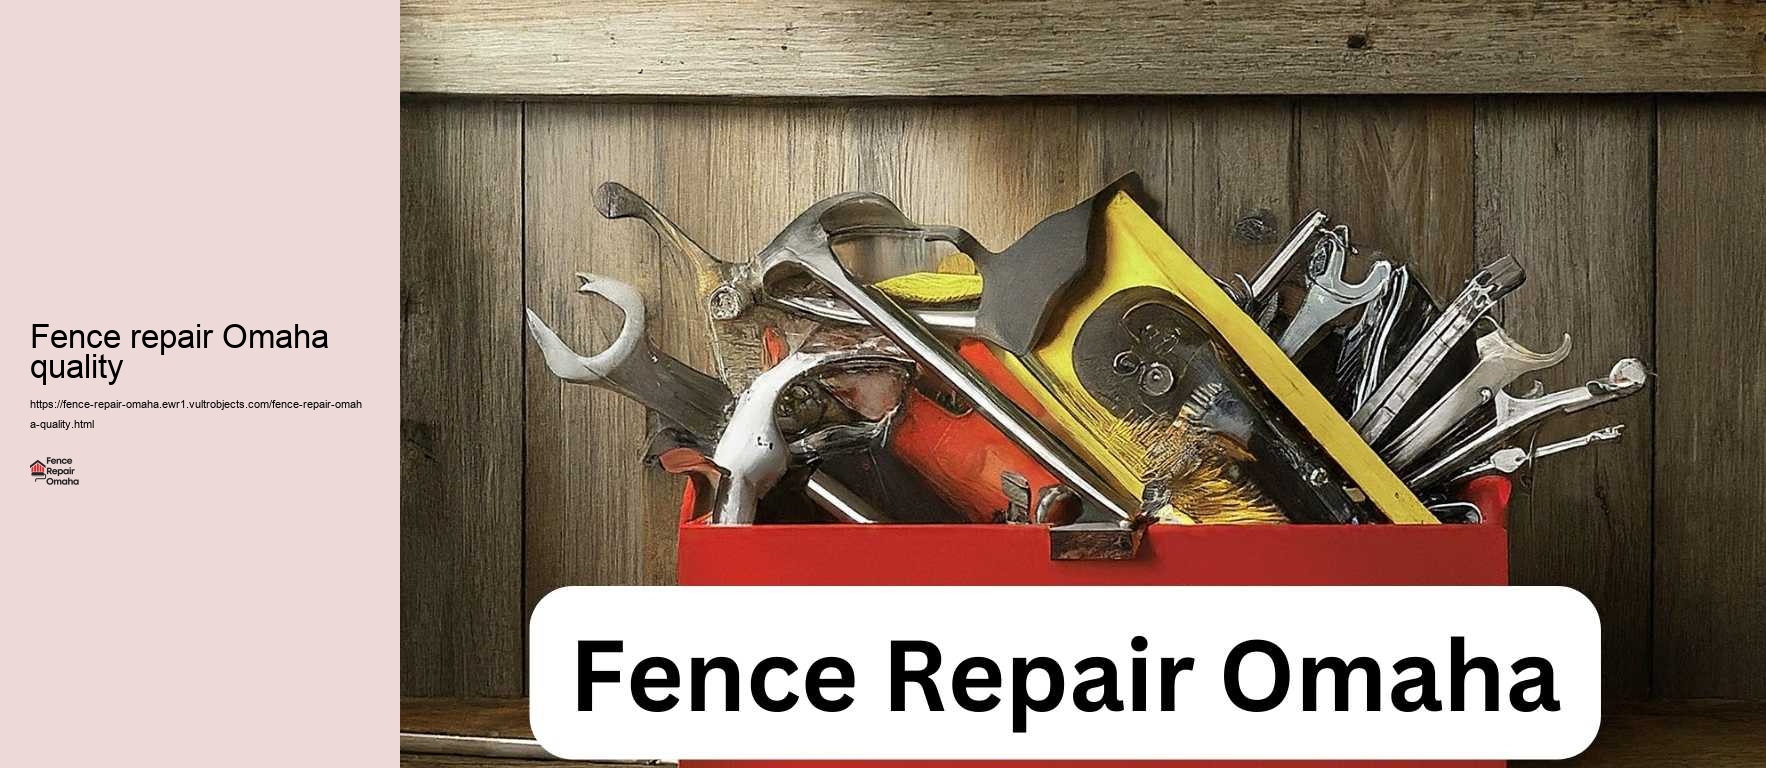 Fence repair Omaha quality